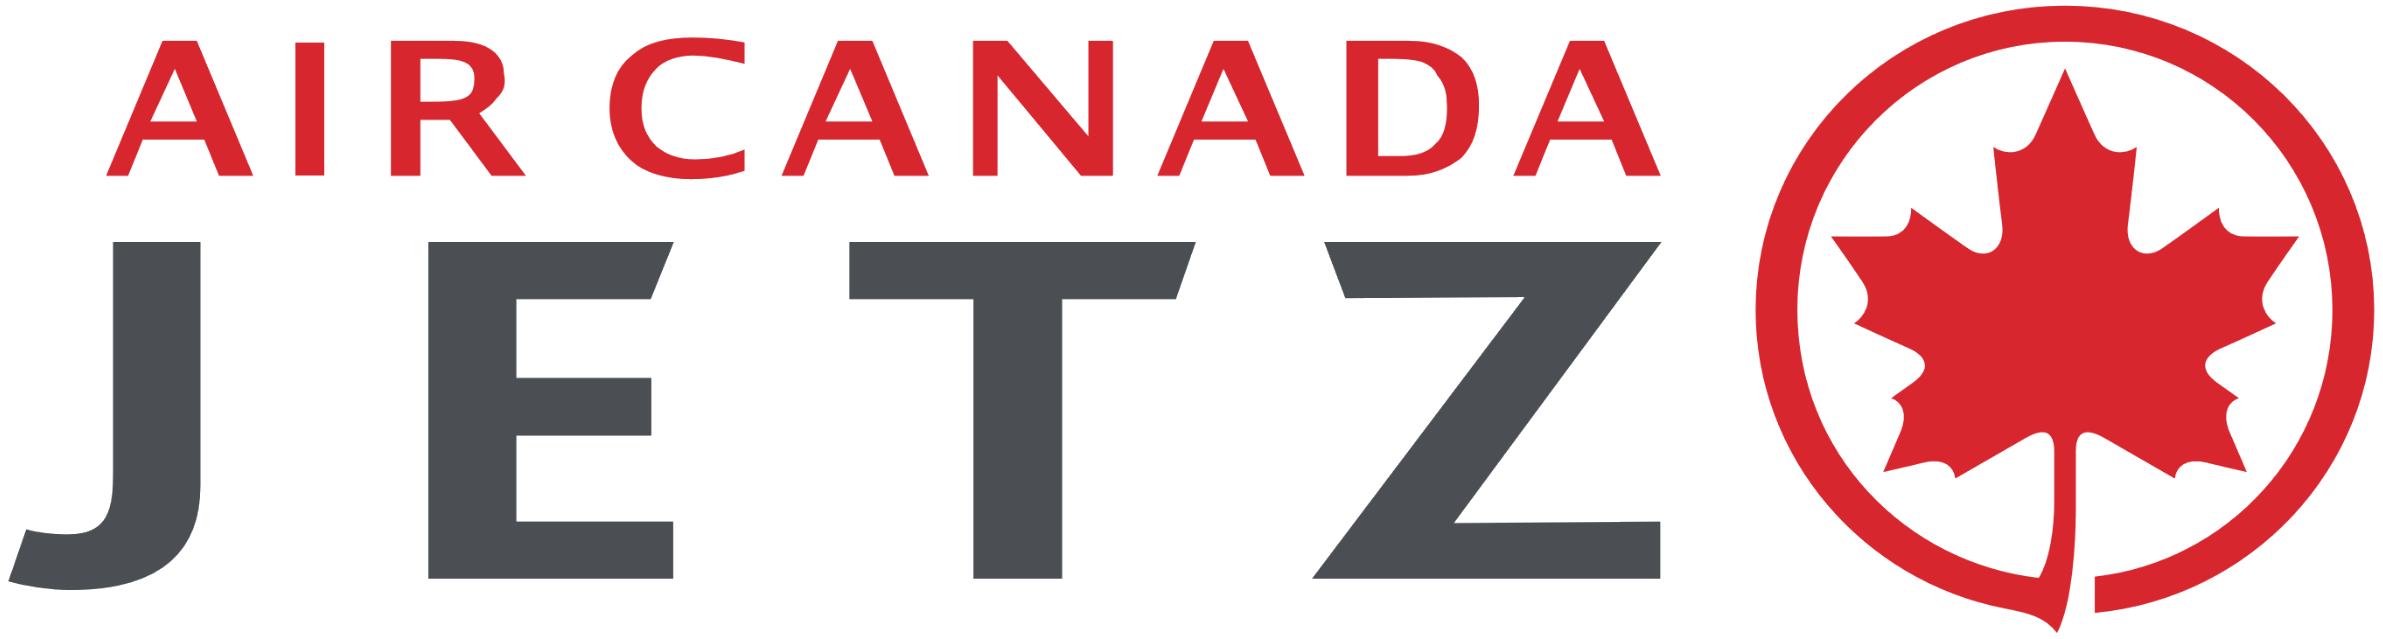 Air Canada Logo - File:Air Canada Jetz logo 2017.png - Wikimedia Commons